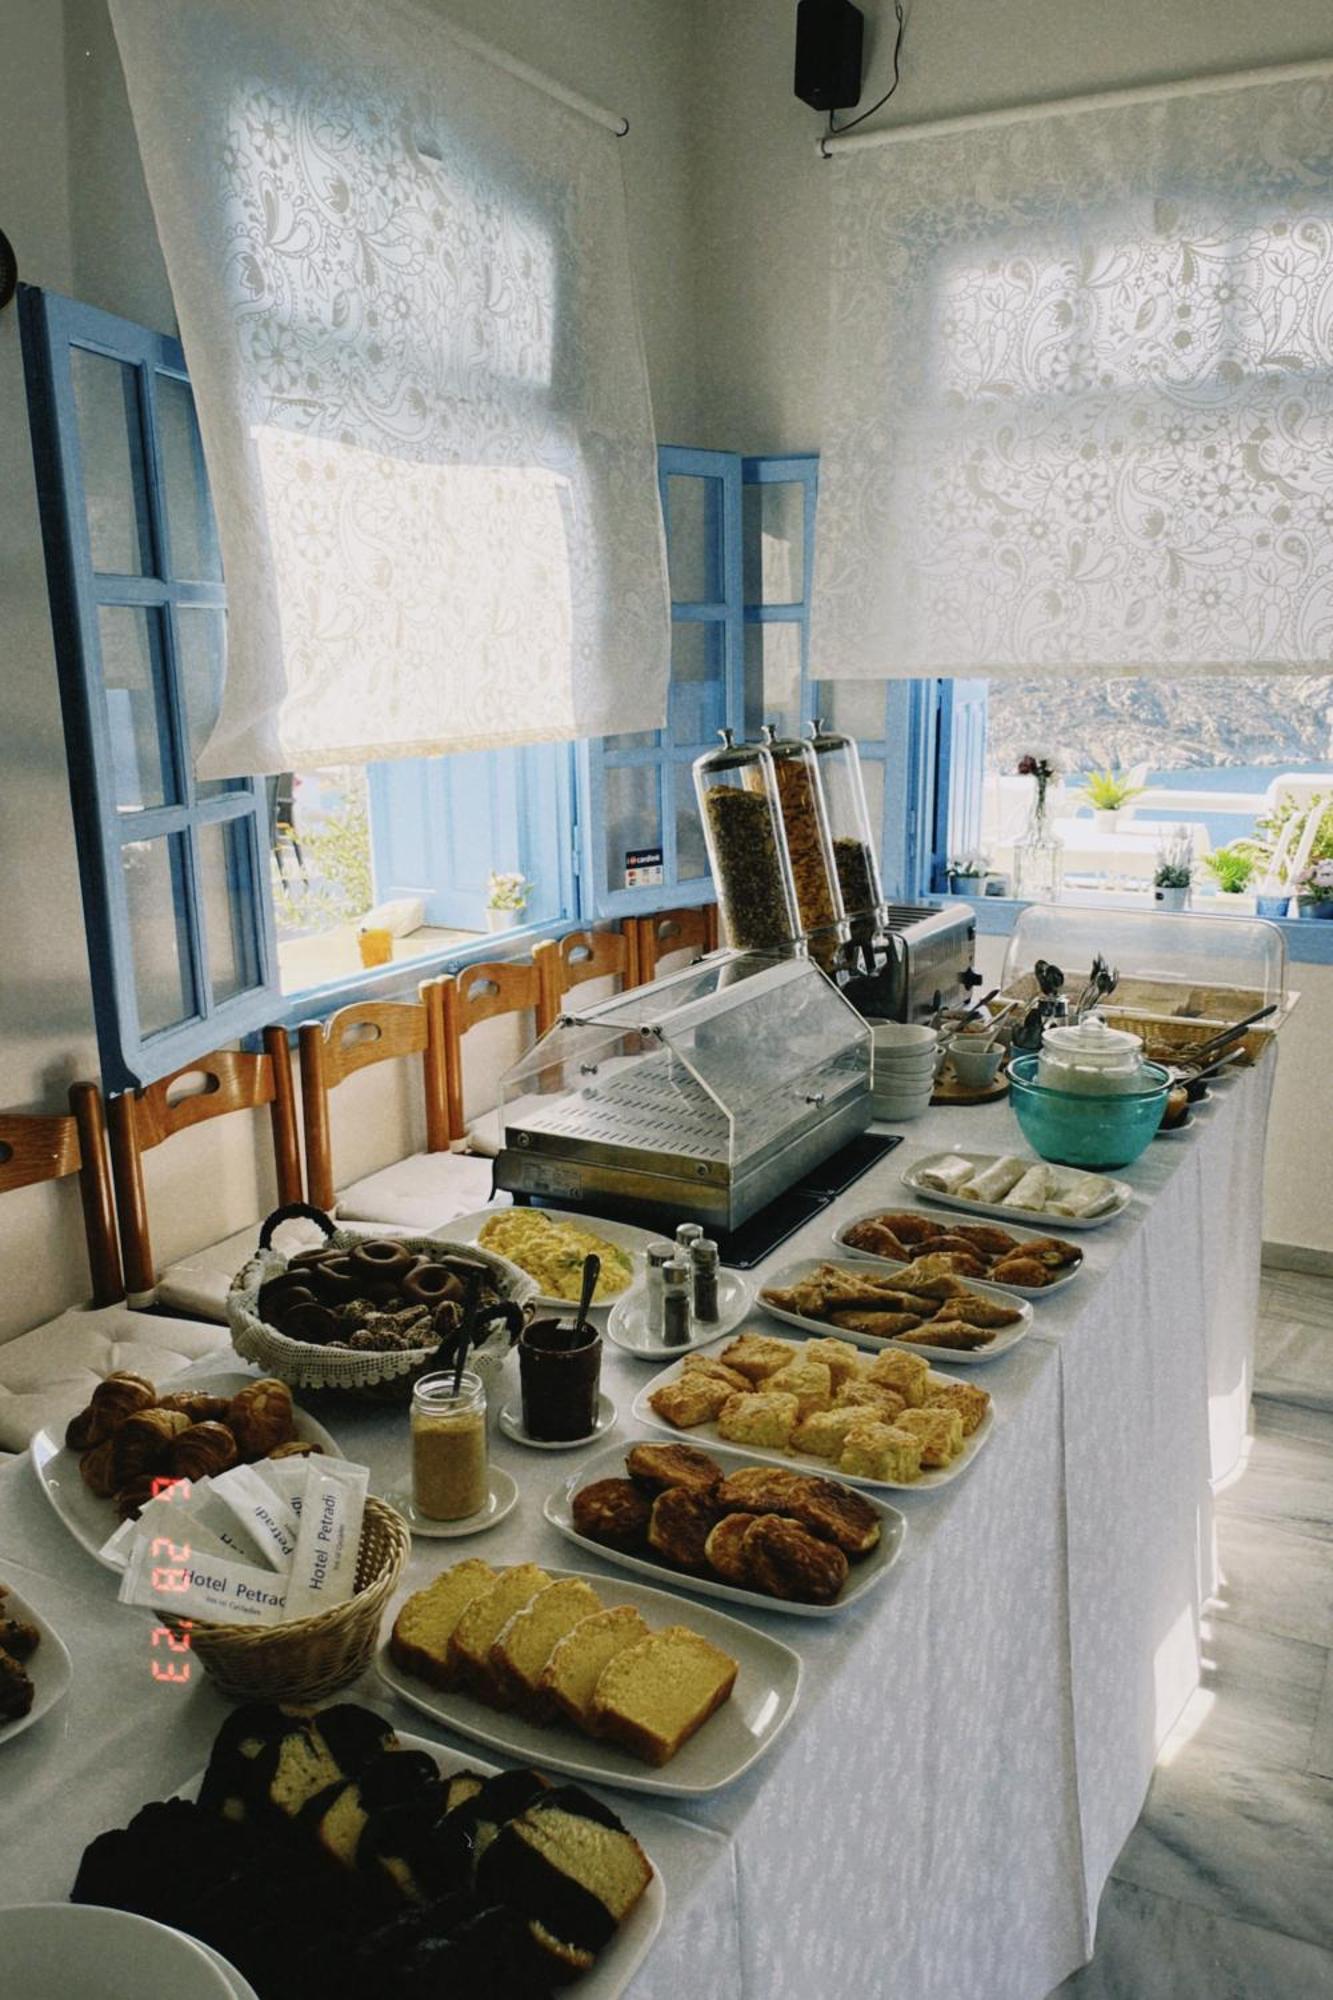 Hotel Petradi イオス島 チョーラ エクステリア 写真